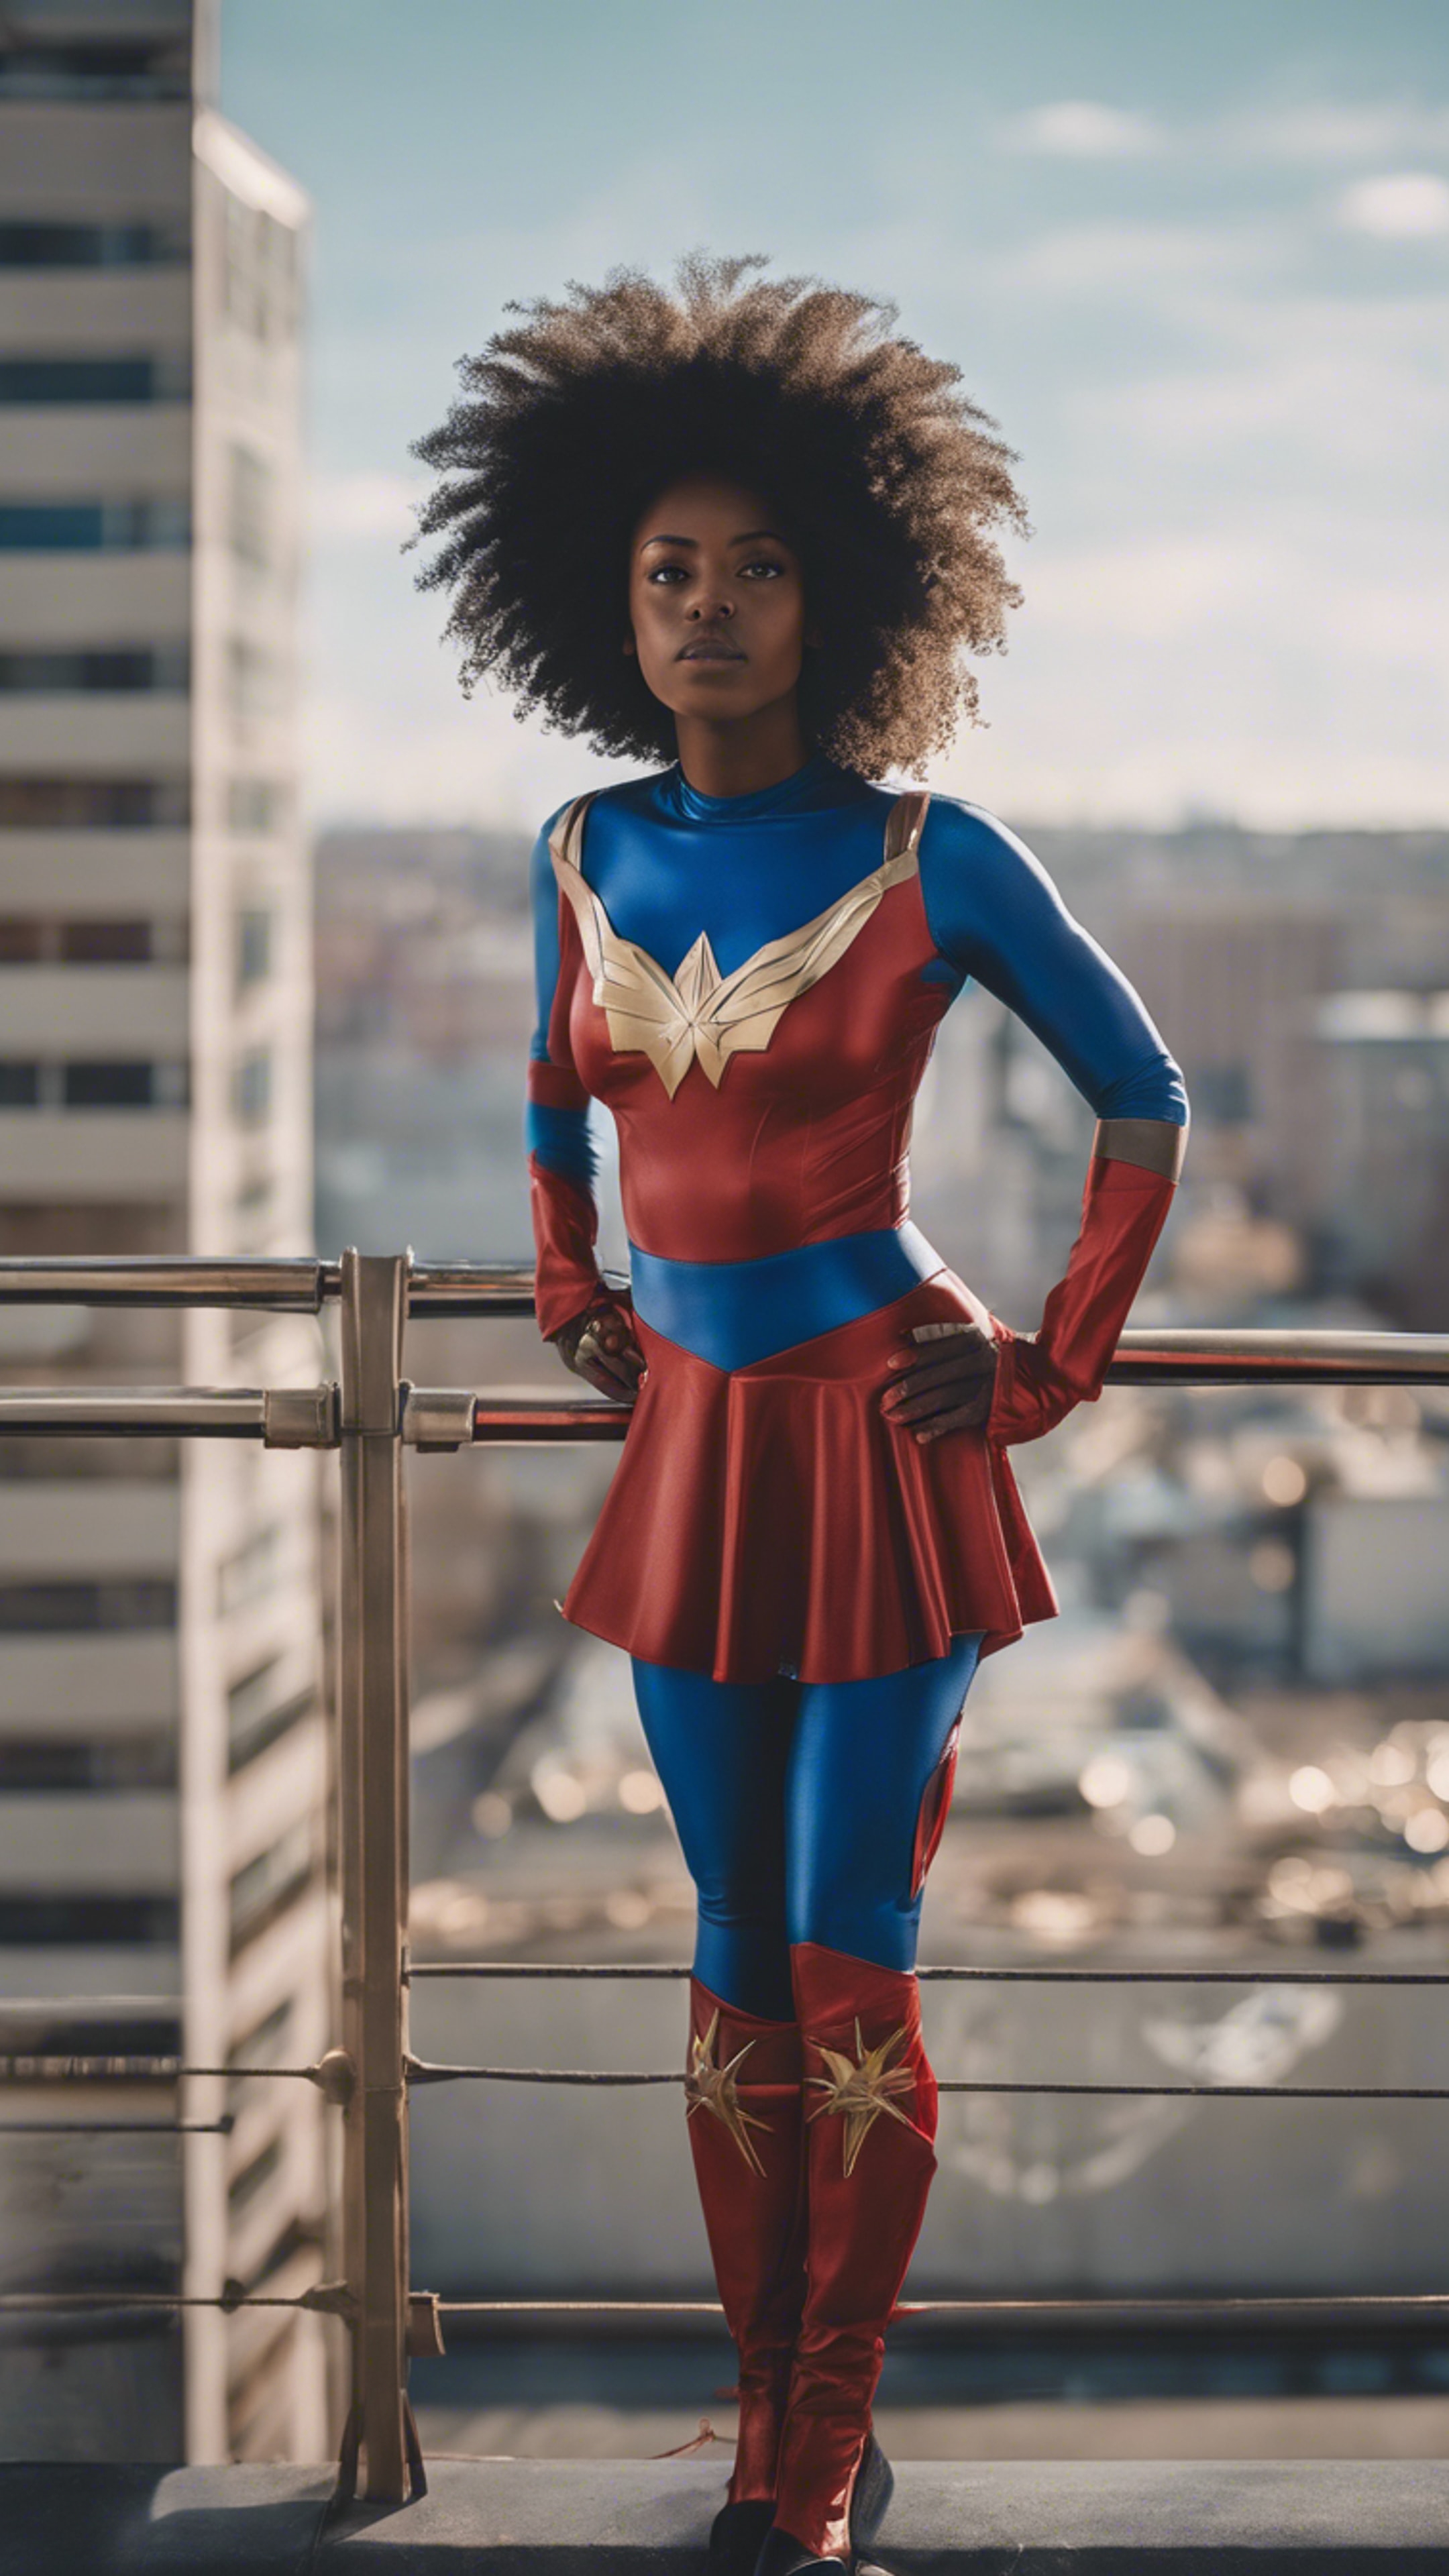 A black girl wearing a superhero costume, standing strong on top of a tall building. Tapeta[591a0dfe38314cf2b9da]